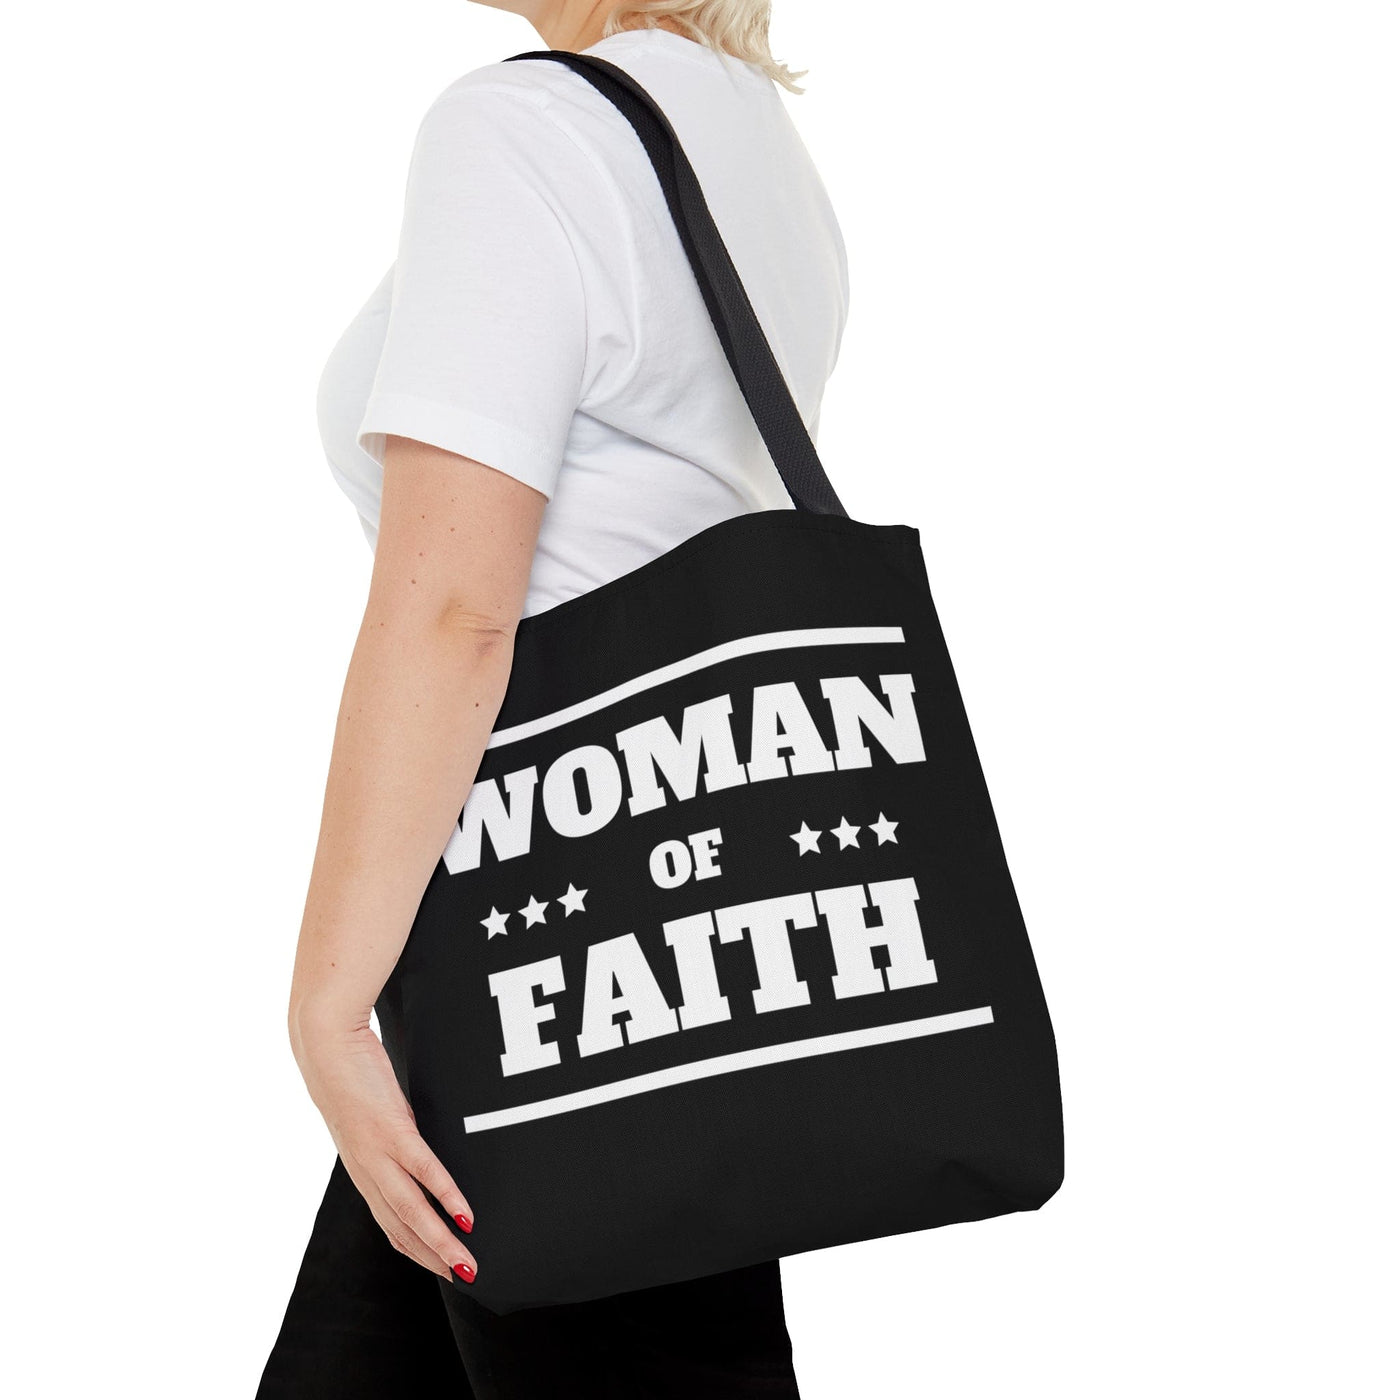 Canvas Tote Bag Woman Of Faith Christian Inspiration Biblical Motivation - Bags